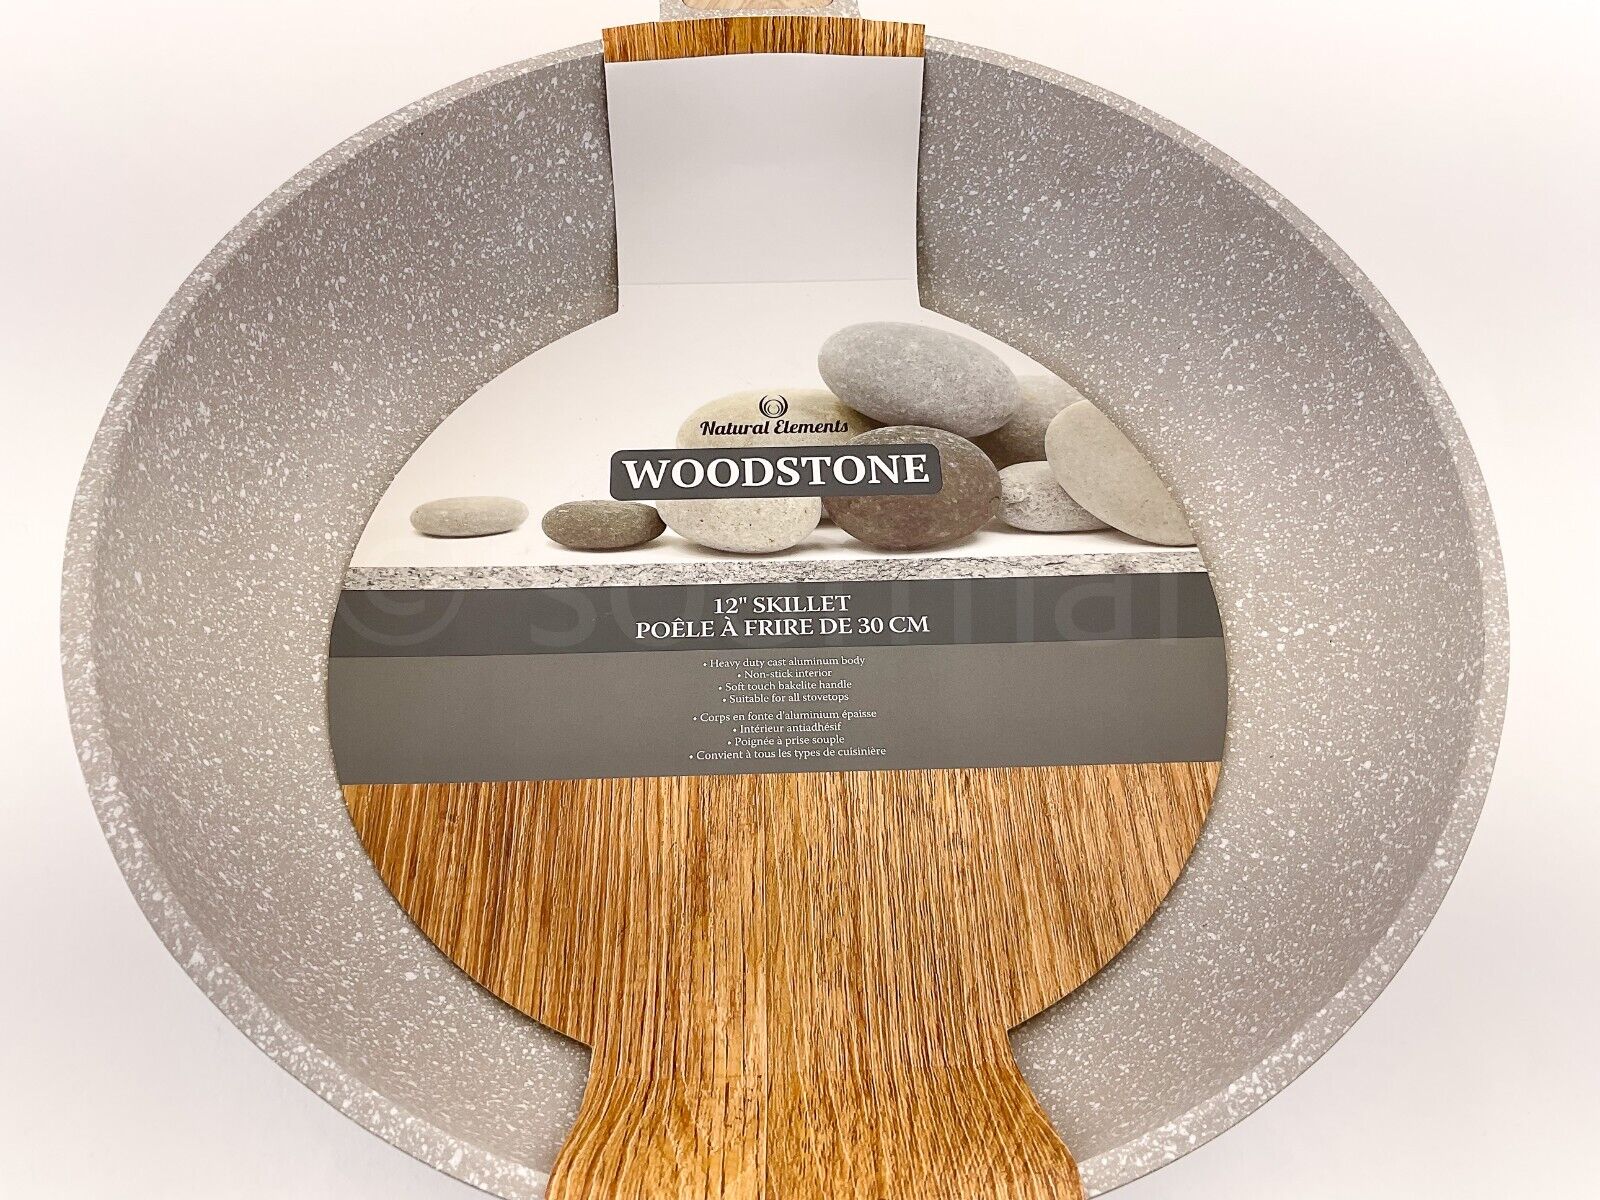 Natural Elements Woodstone Big Skillet/Frying Pan Nonstick Heavy